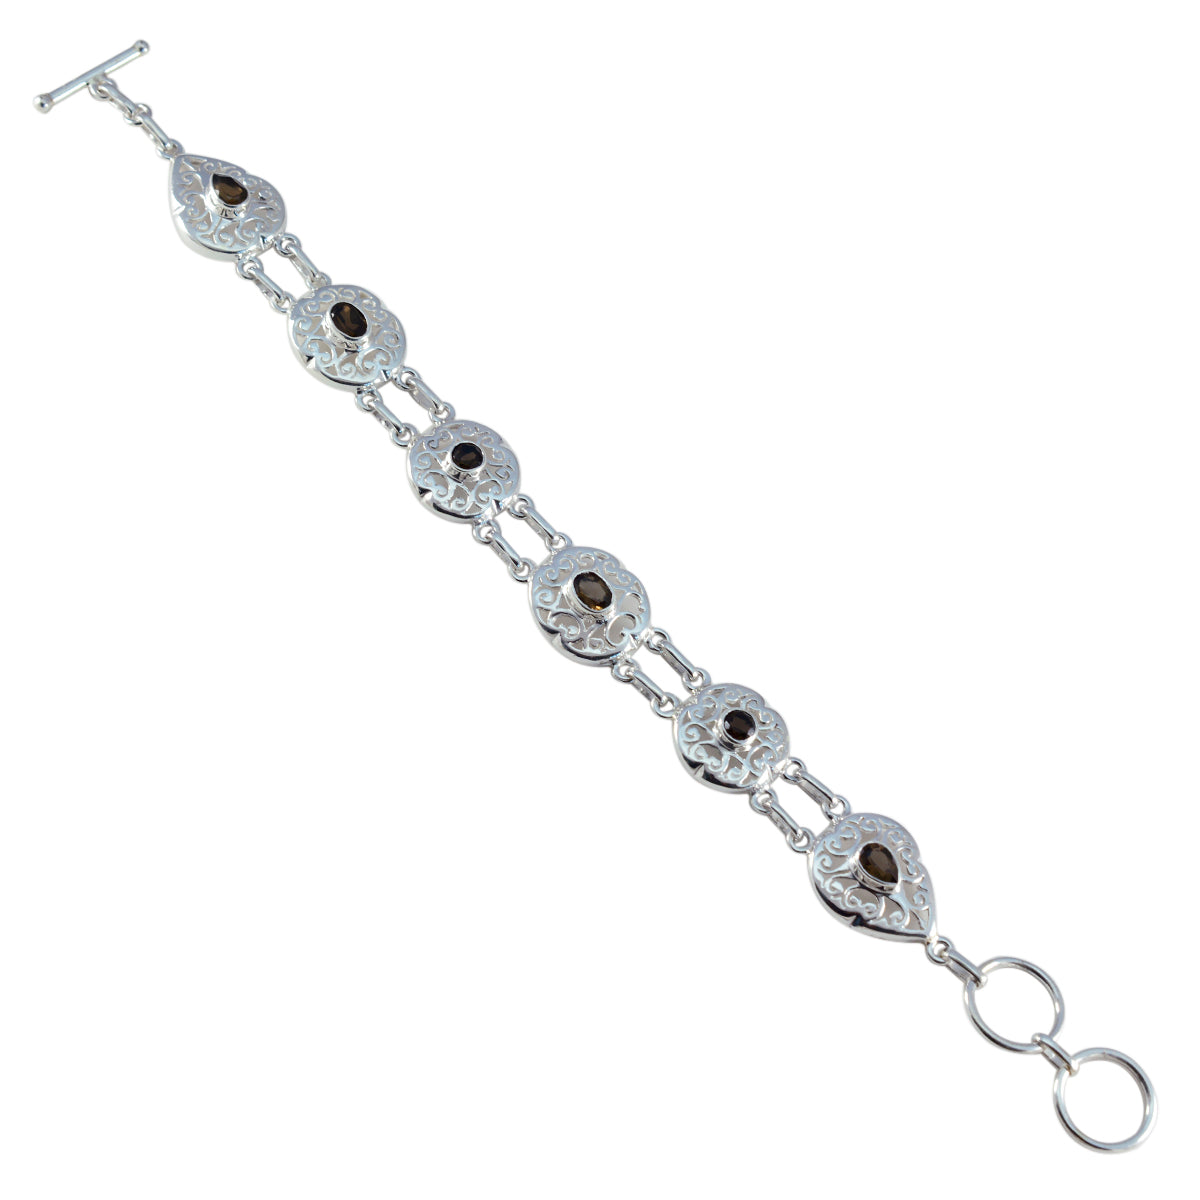 Riyo Rare 925 Sterling Silver Bracelet For Girls Smoky Quartz Bracelet Bezel Setting Bracelet with Toggle Link Charm Bracelet L Size 6-8.5 Inch.